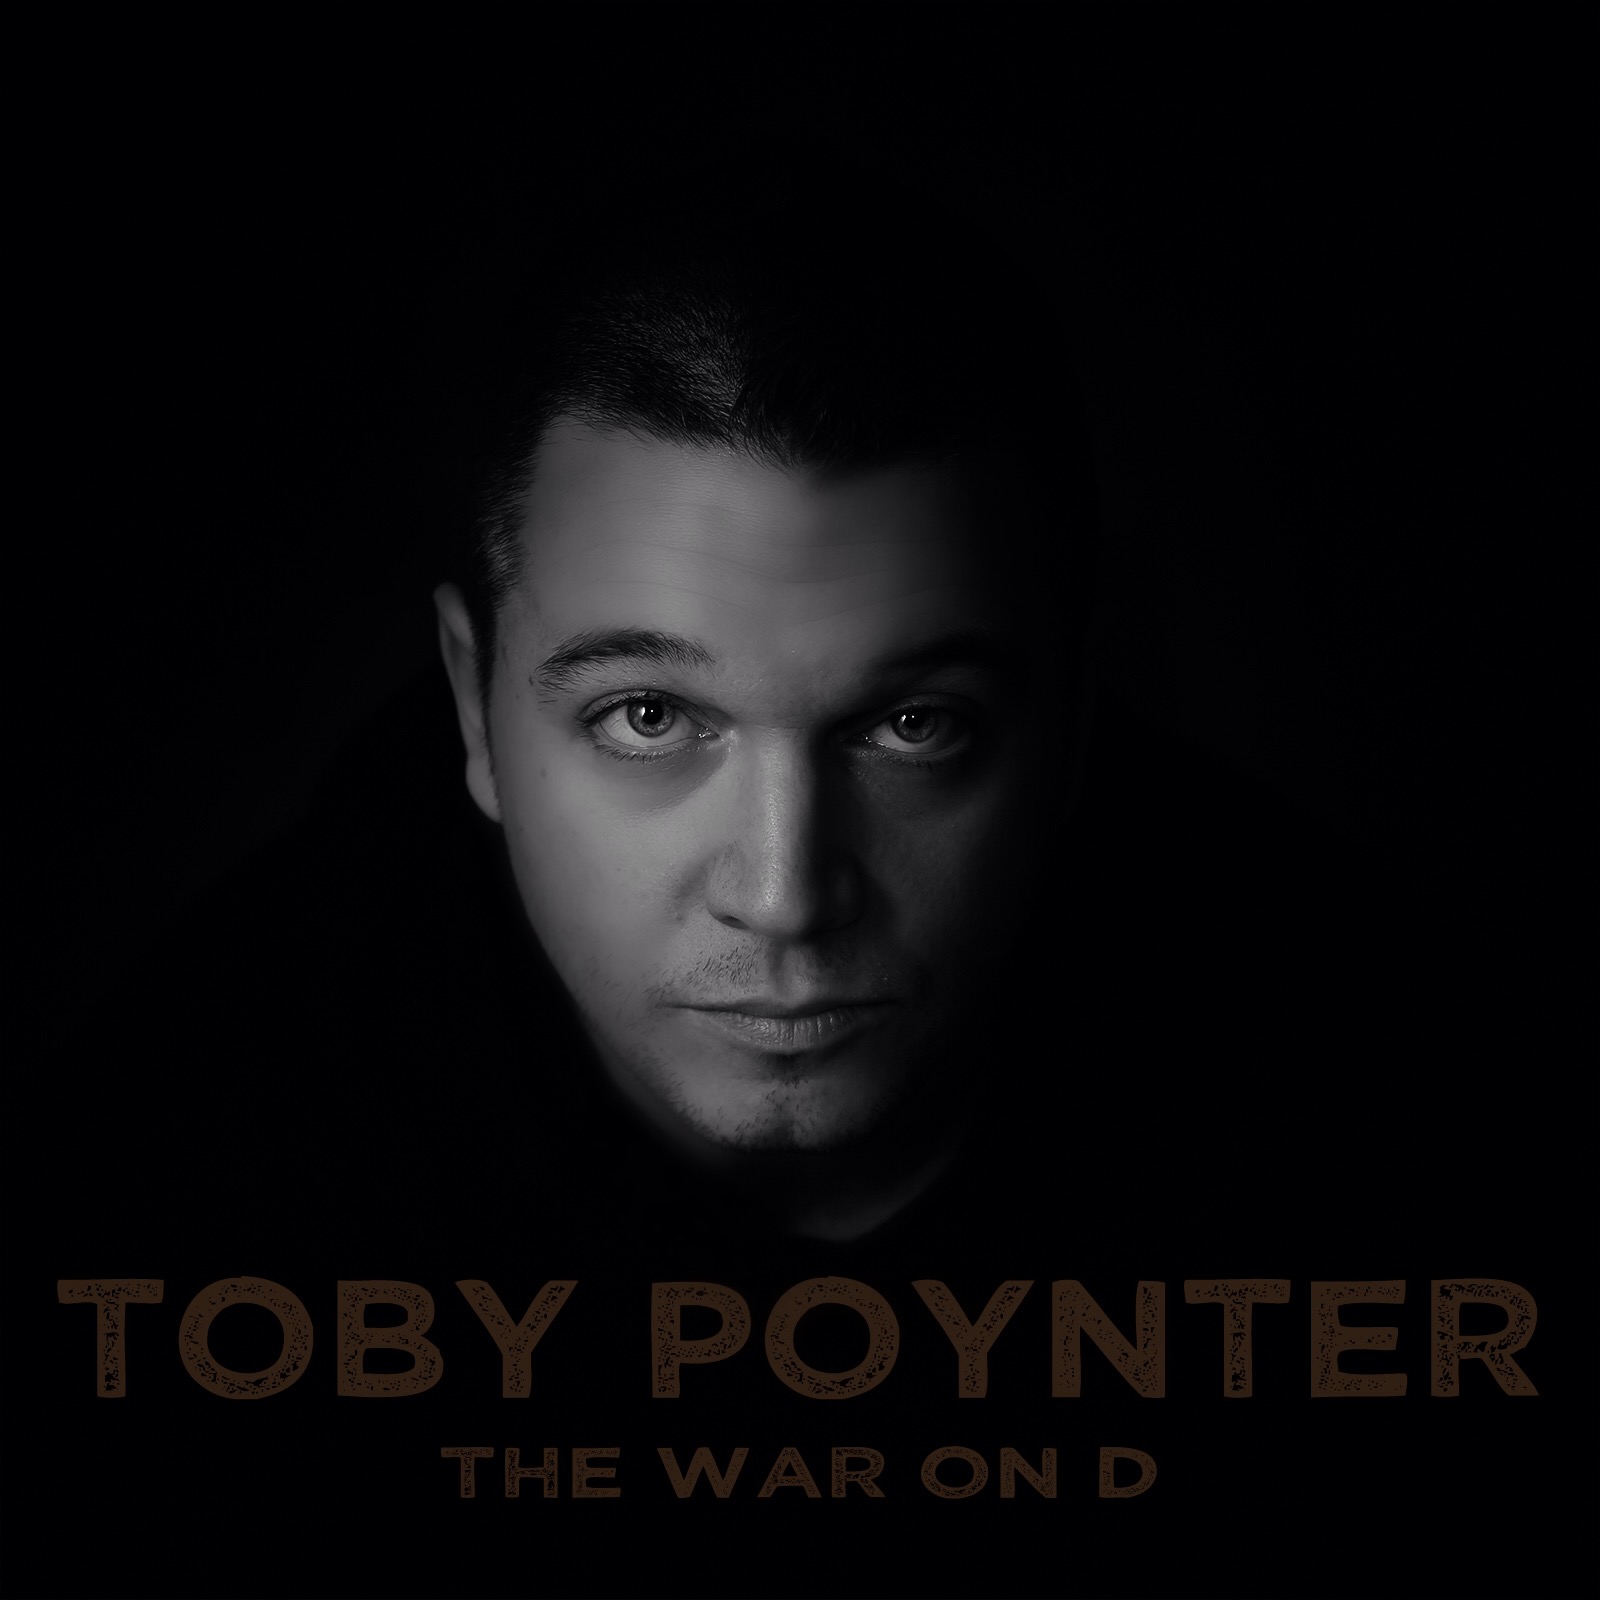  Toby Poynter – “The War On D”